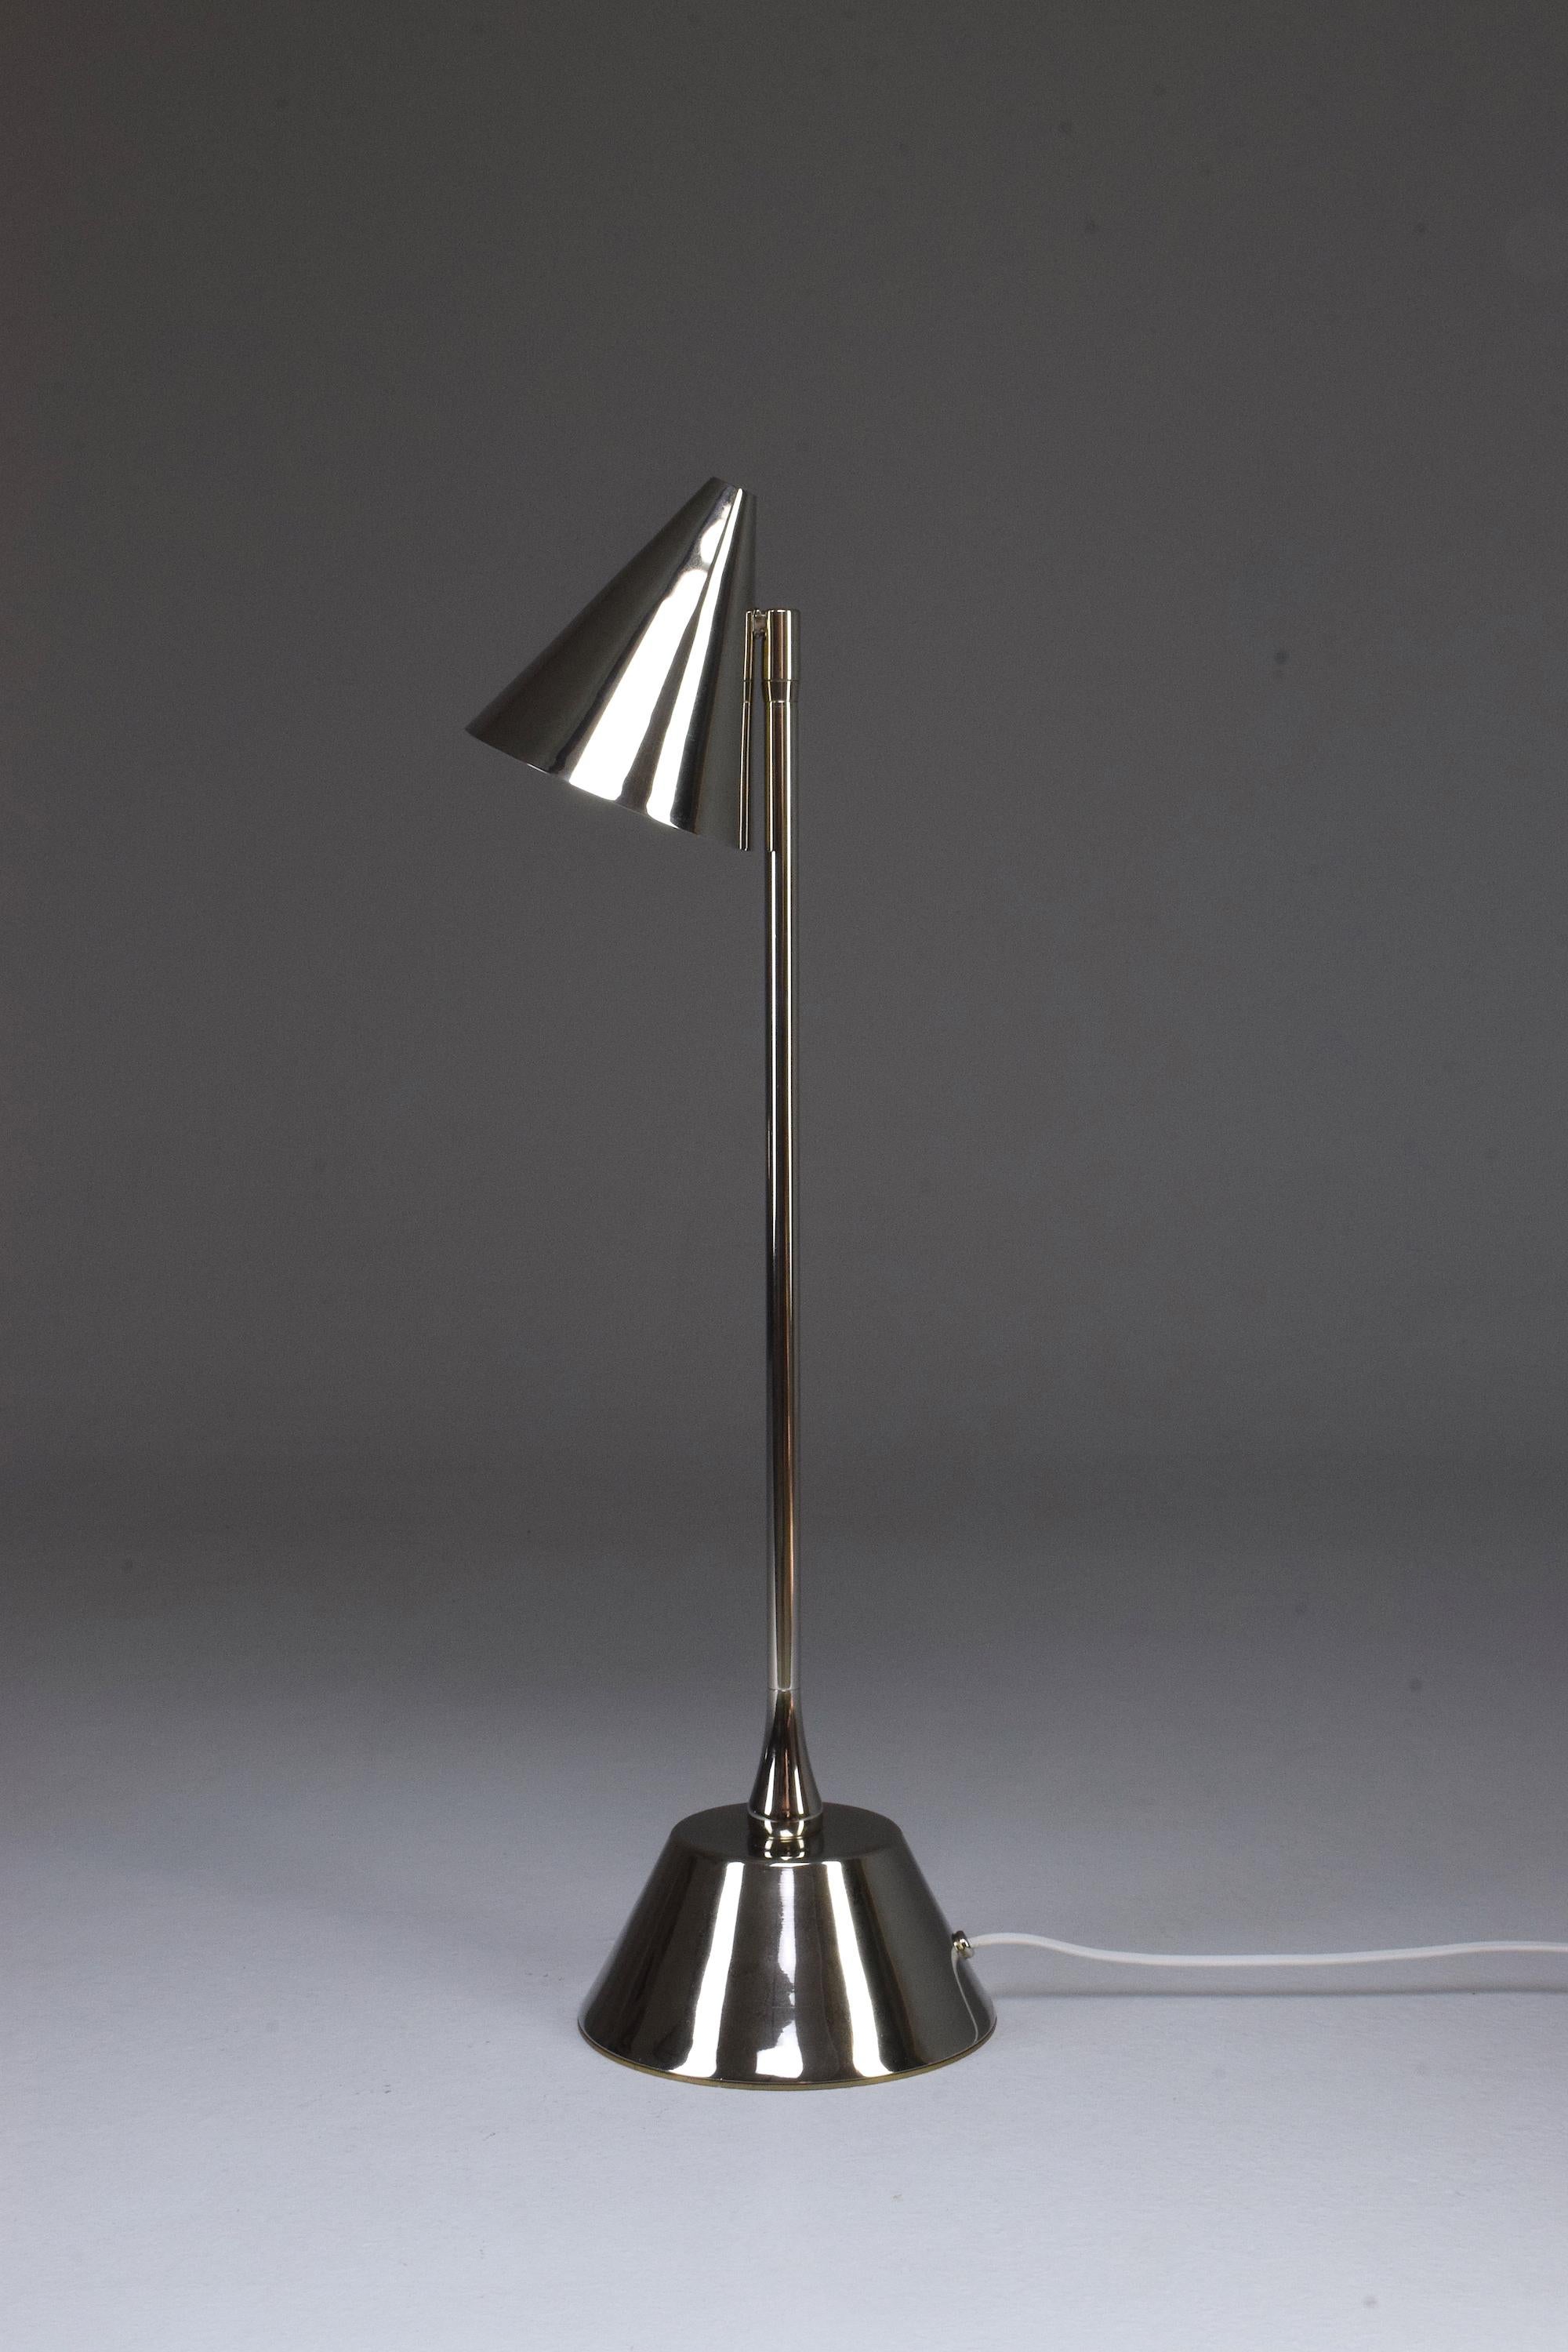 Portuguese De.Light T2 Nickeled Brass Desk Lamp, Flow 2 Collection For Sale